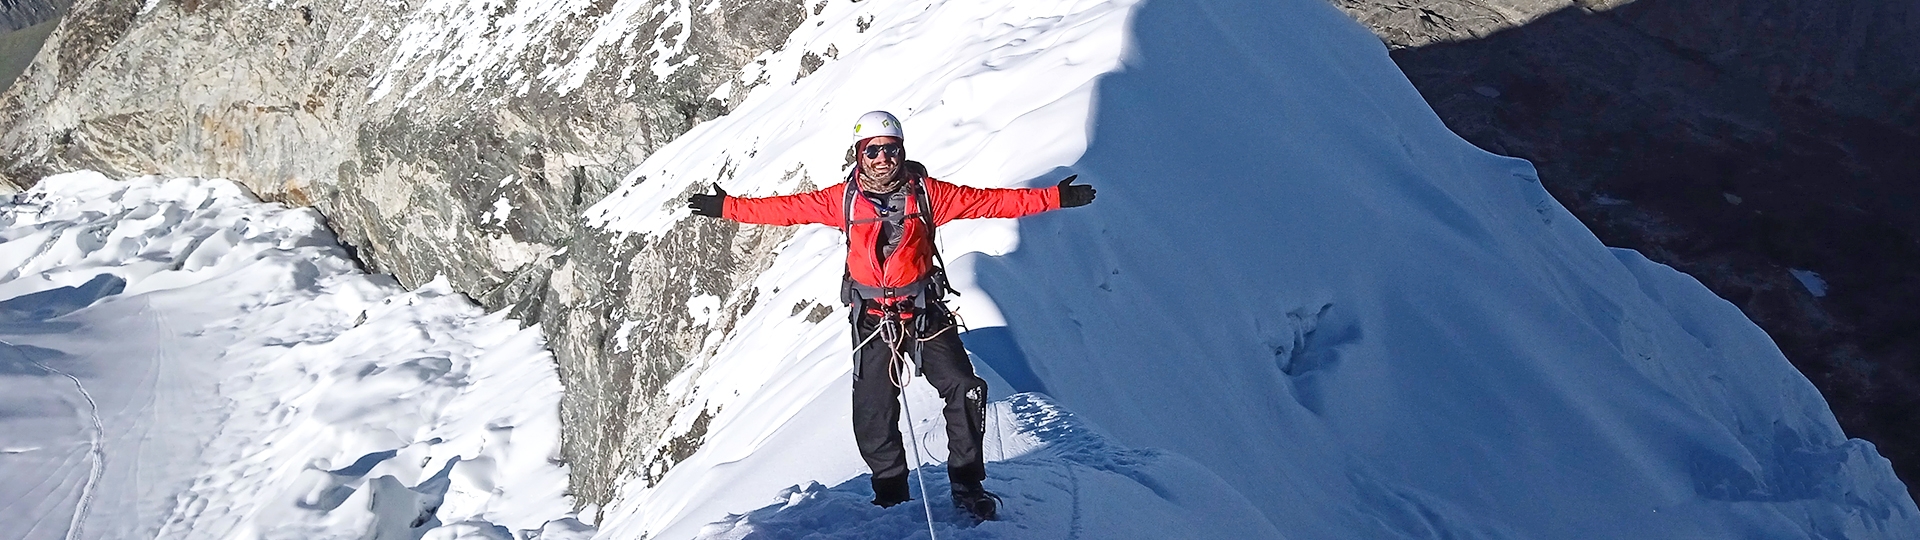 Top 6 Peak Climbing in Nepal